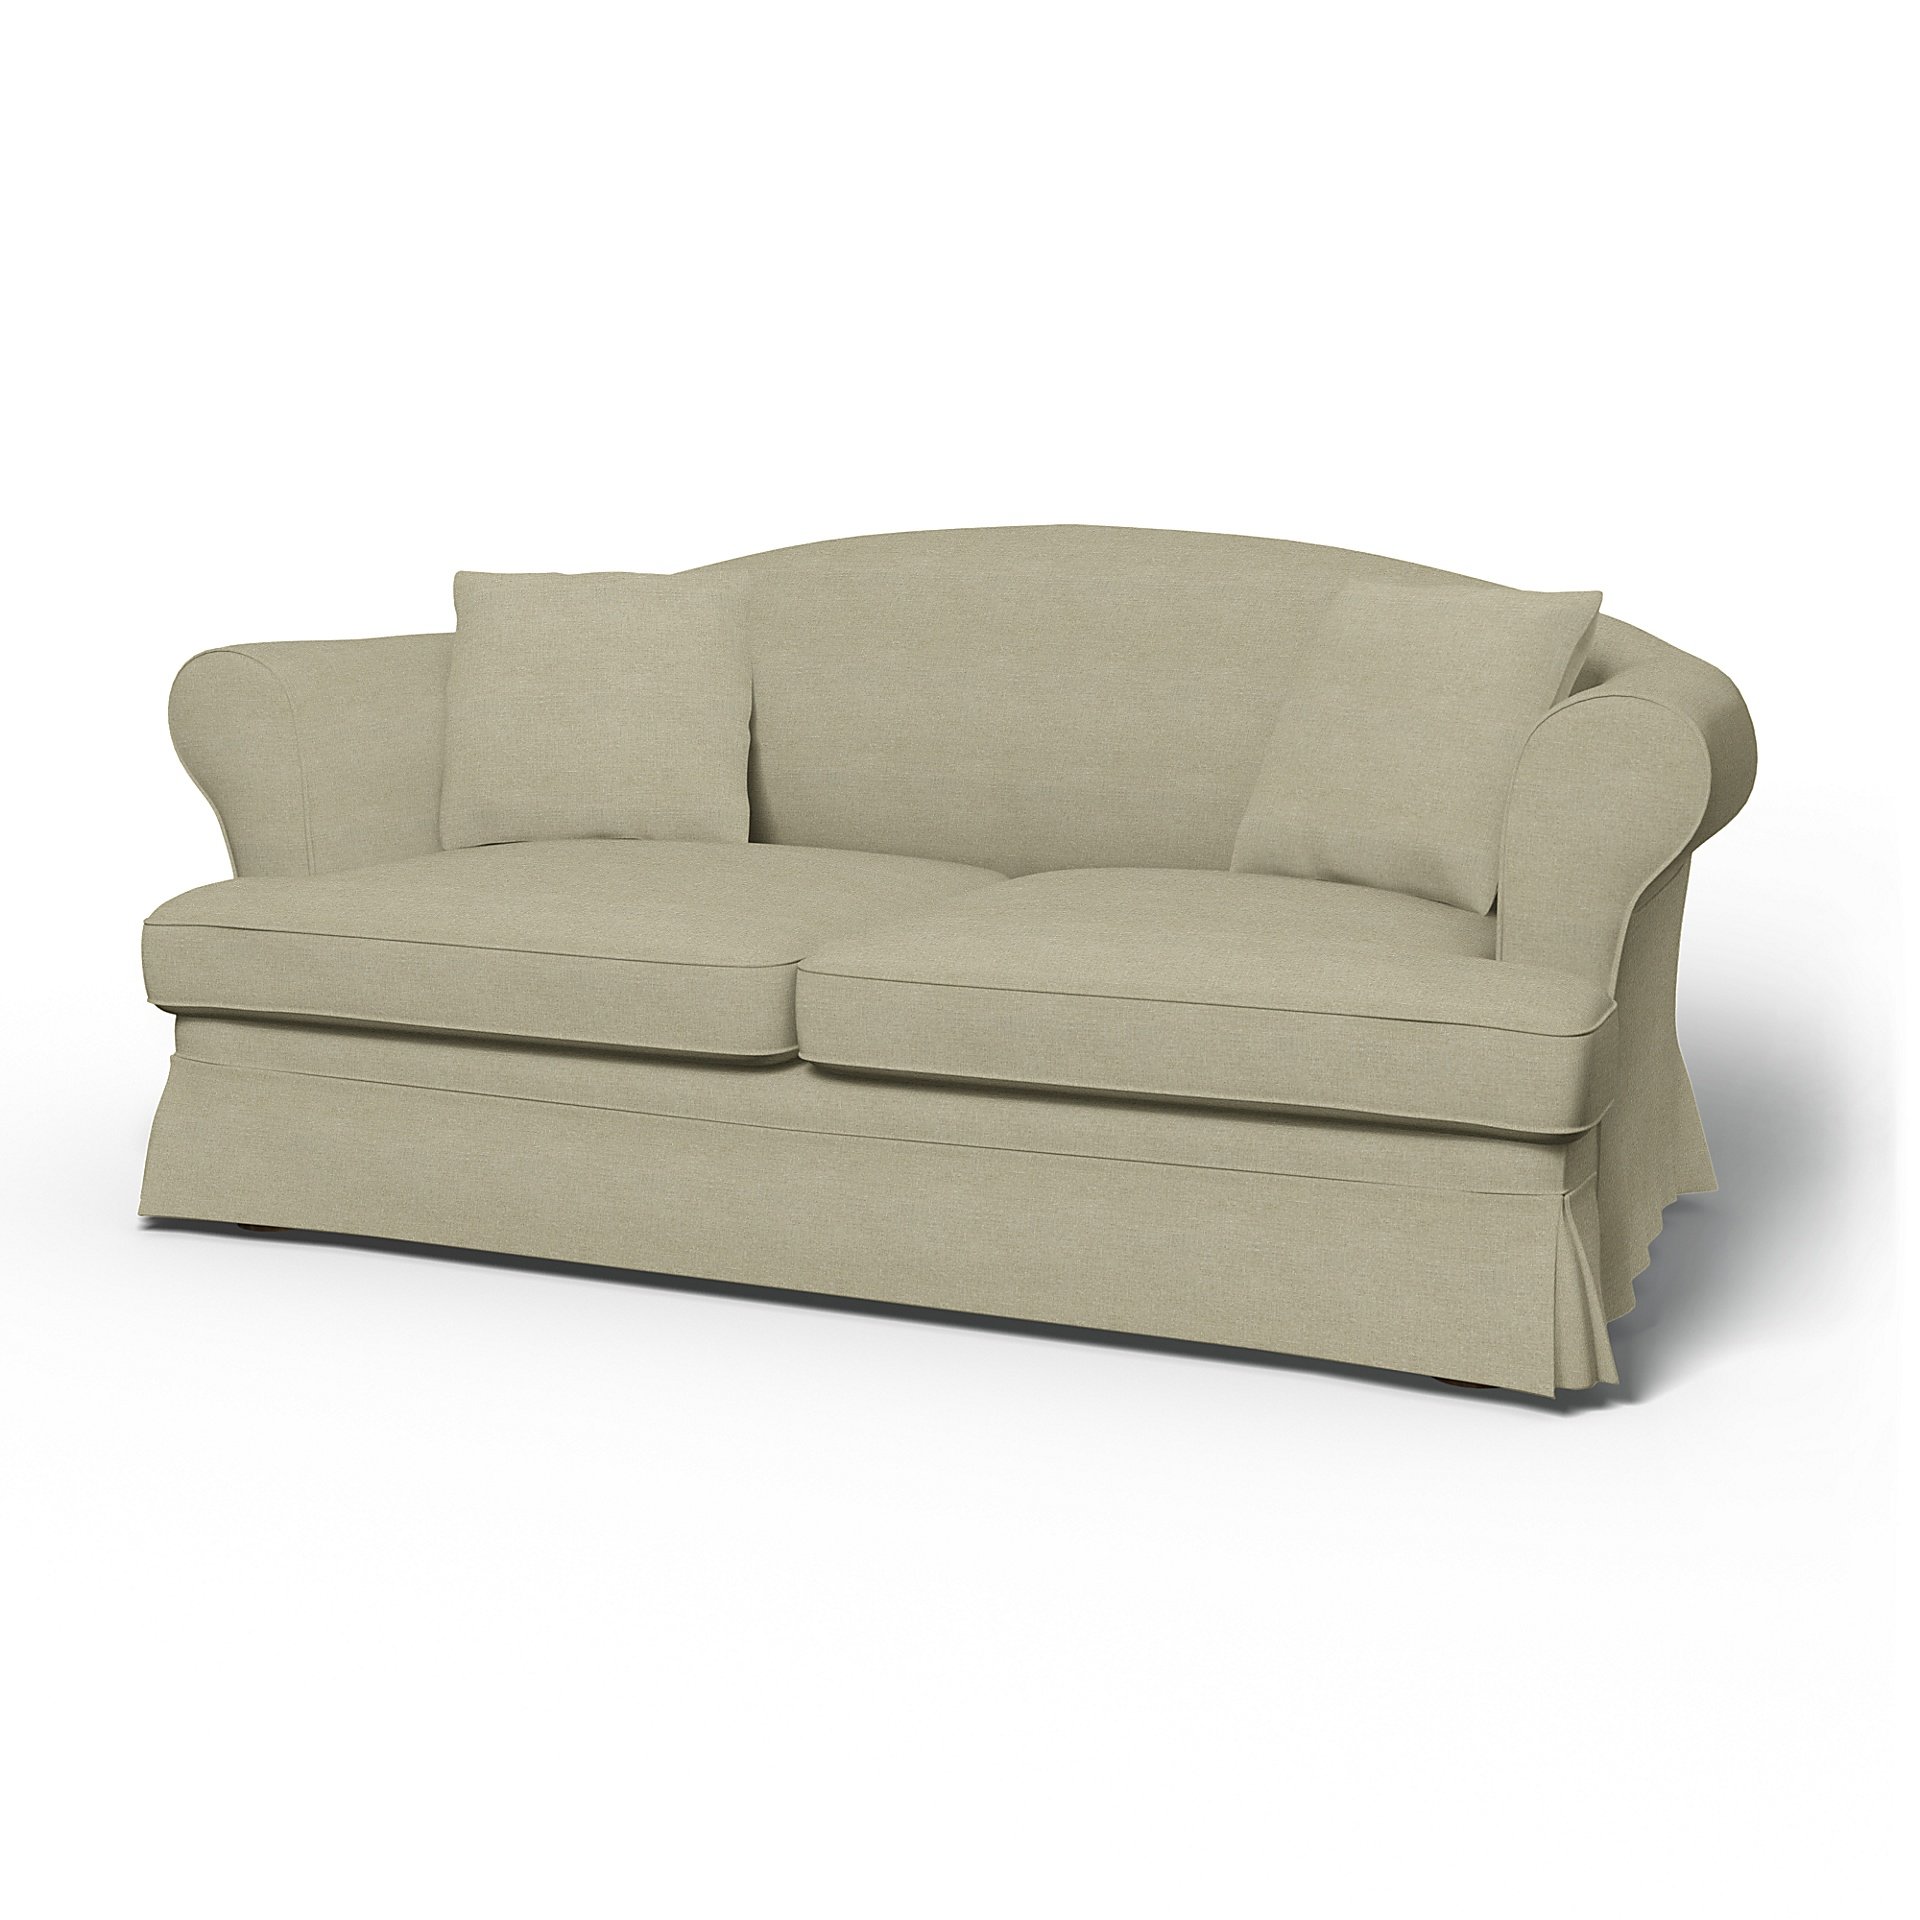 IKEA - Sundborn Sofa Bed Cover, Pebble, Linen - Bemz